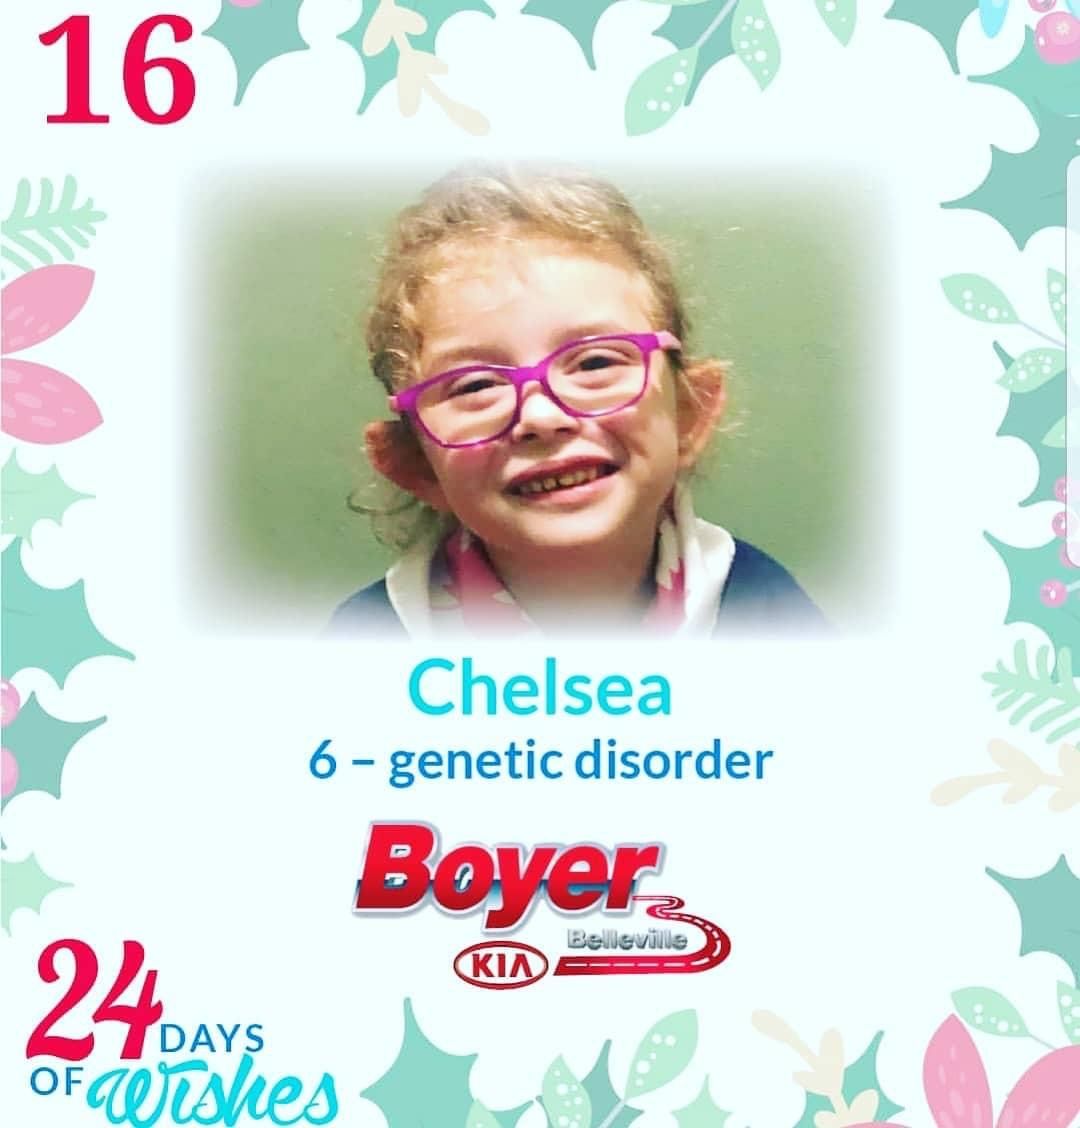 Boyer Kia & Children's Wish Grant Chelsea Her Wish